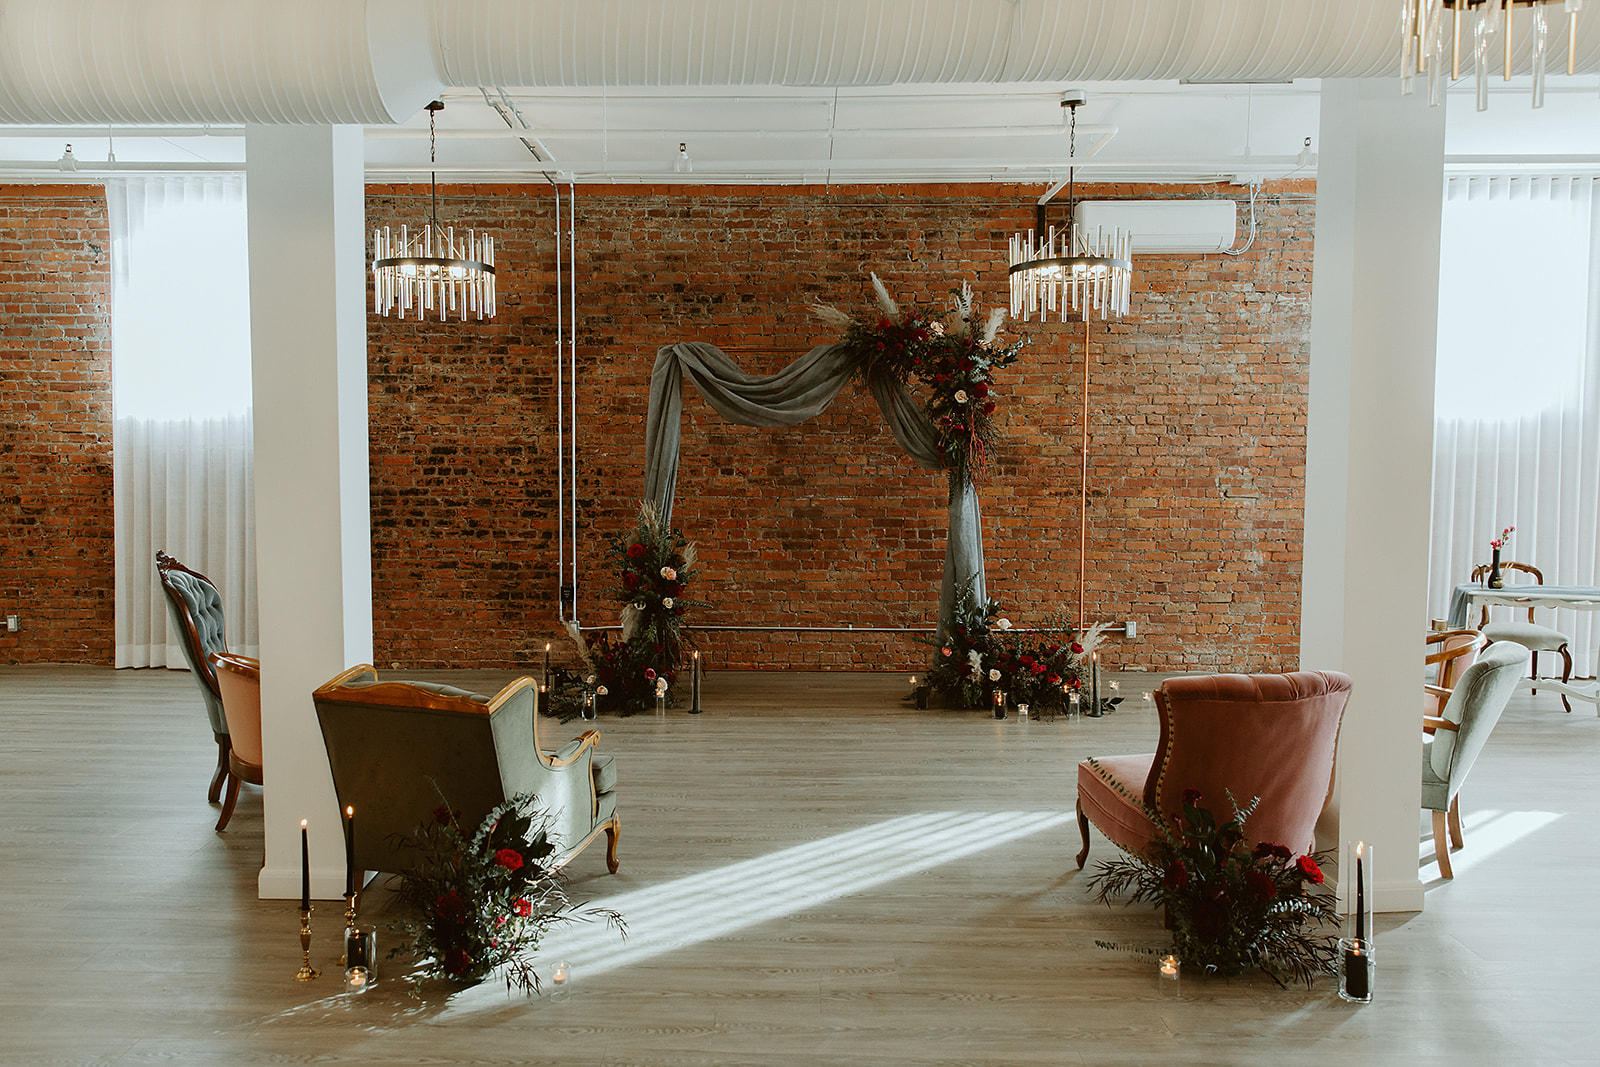 Moroccan and vintage wedding ceremony inspiration for an indoor wedding venue in Calgary Alberta